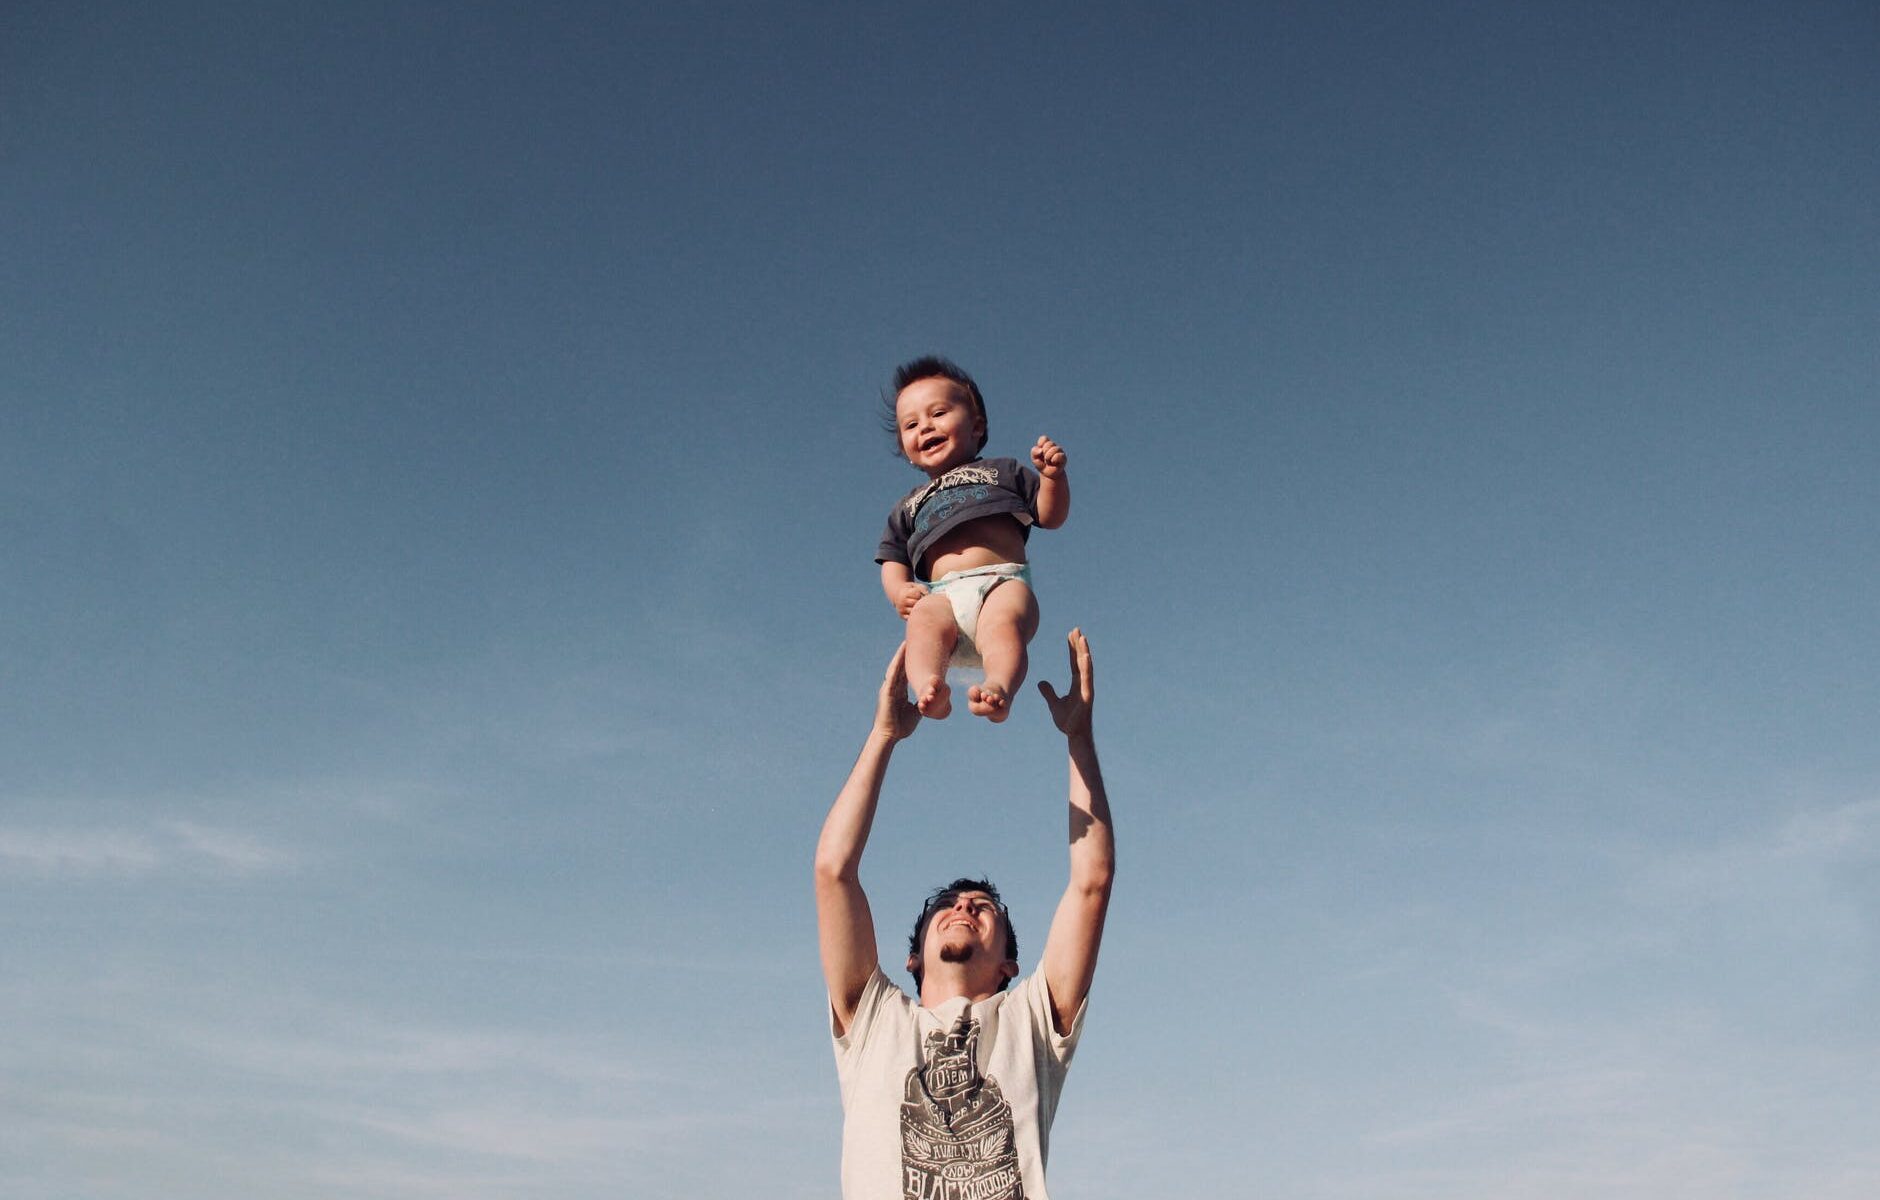 photo of man in raising baby under blue sky